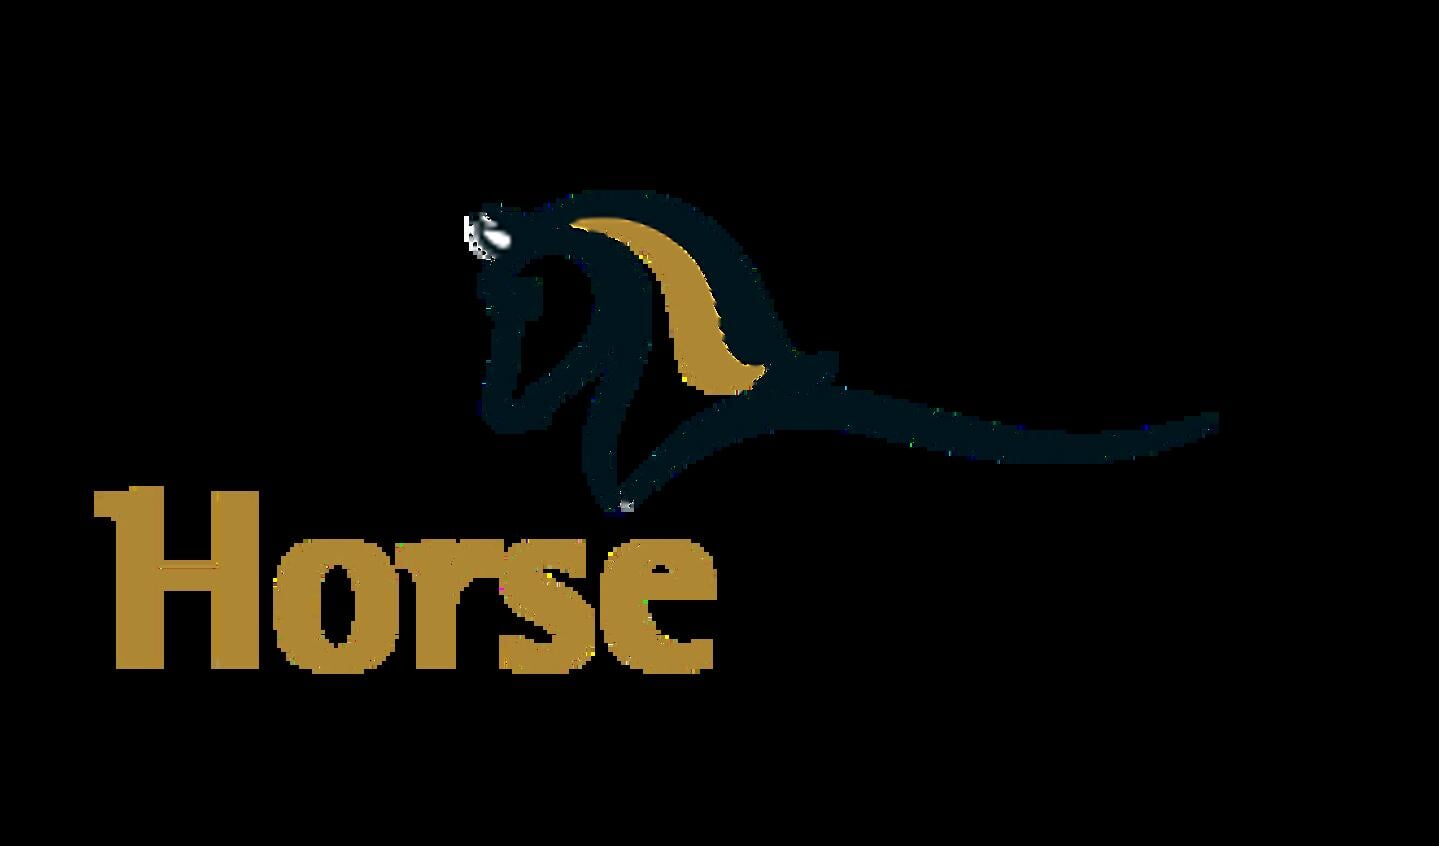 Horse event logo